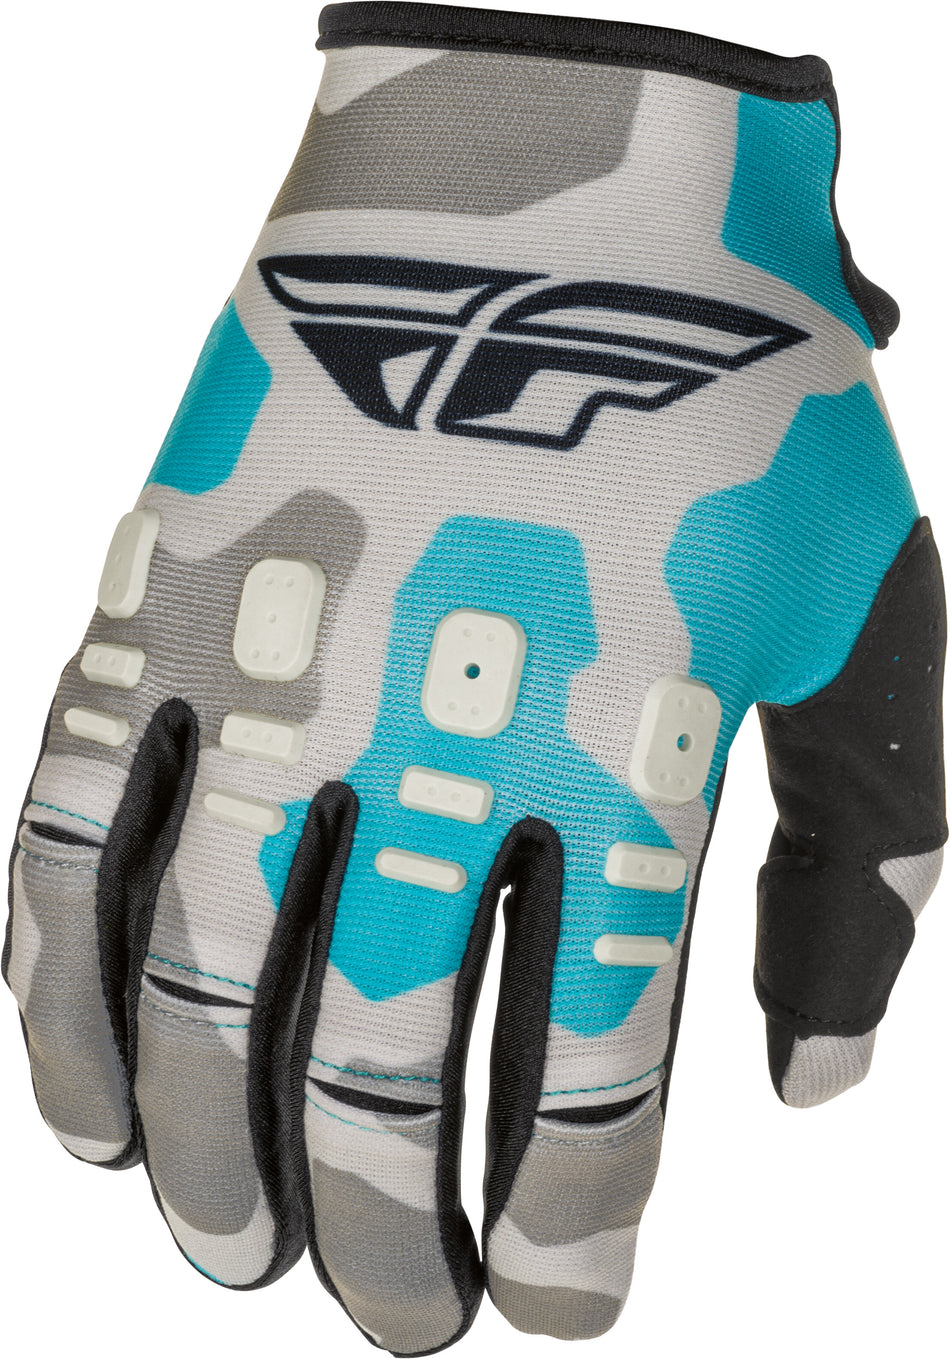 FLY RACING Kinetic K221 Gloves Grey/Blue Sz 11 374-51611